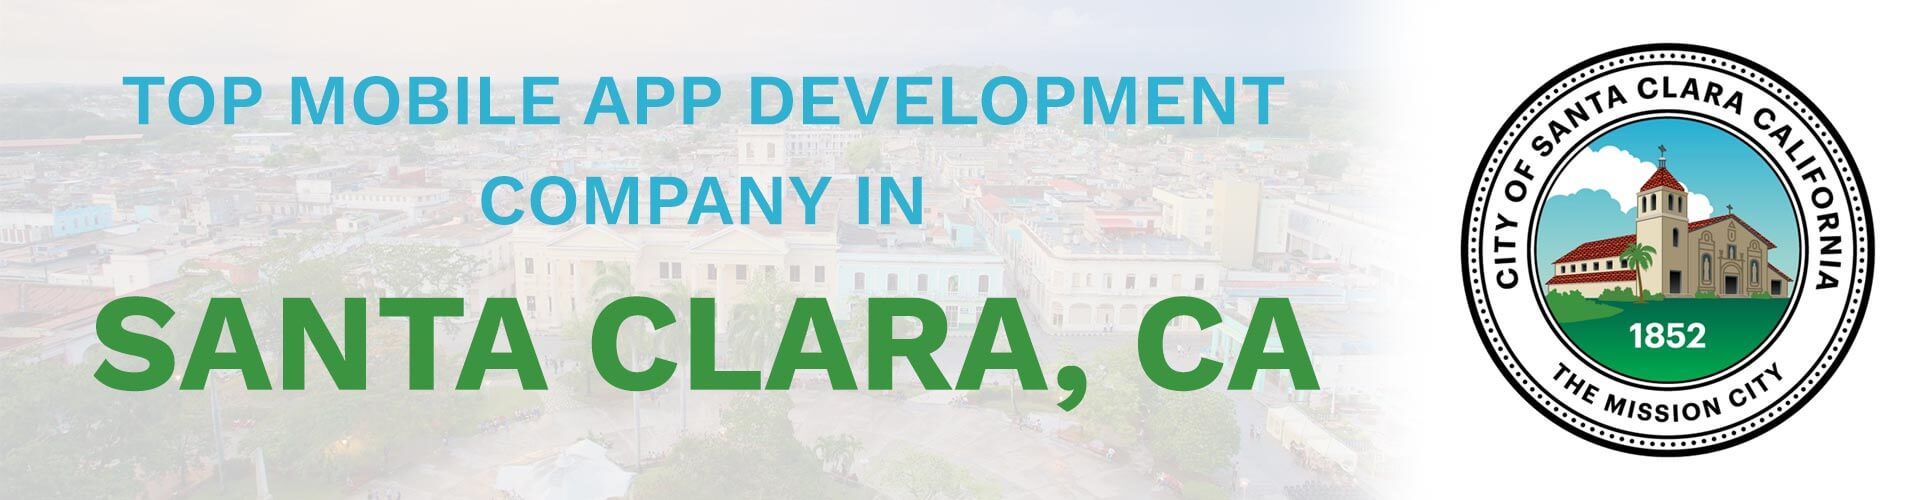 mobile app development company santa clara